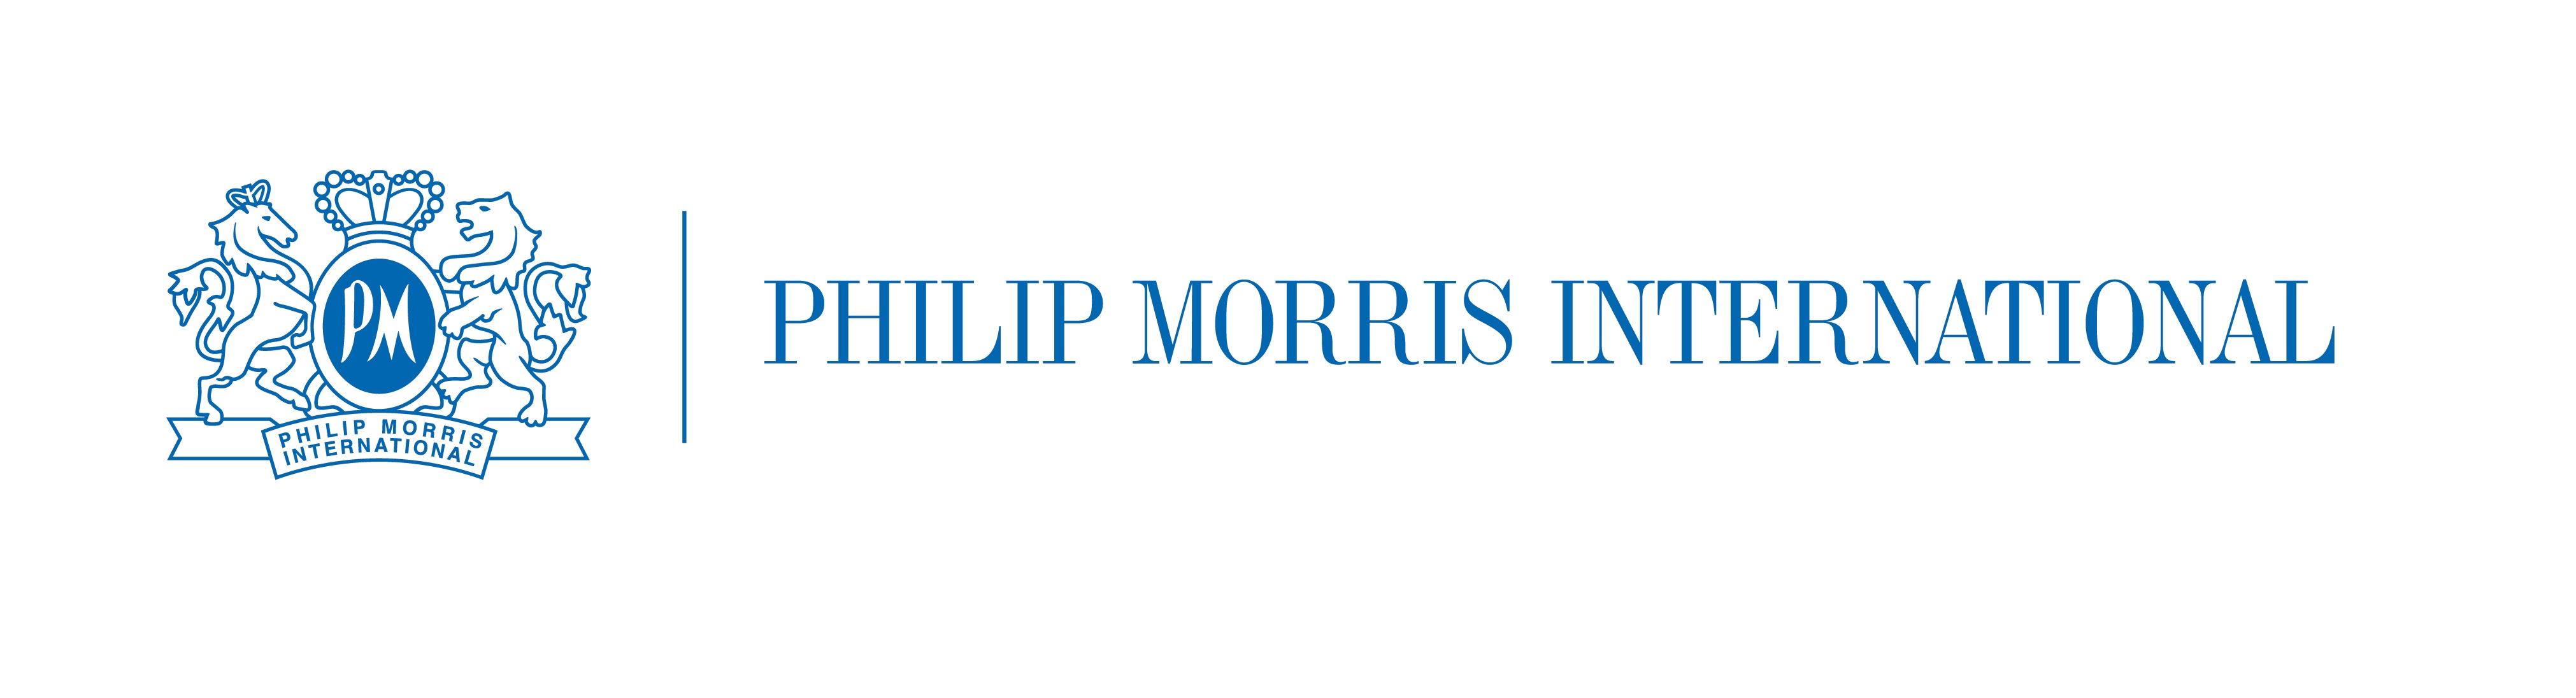 К успеху филип моррис. Philip Morris International логотип. Логотип Филип Моррис Ижора.